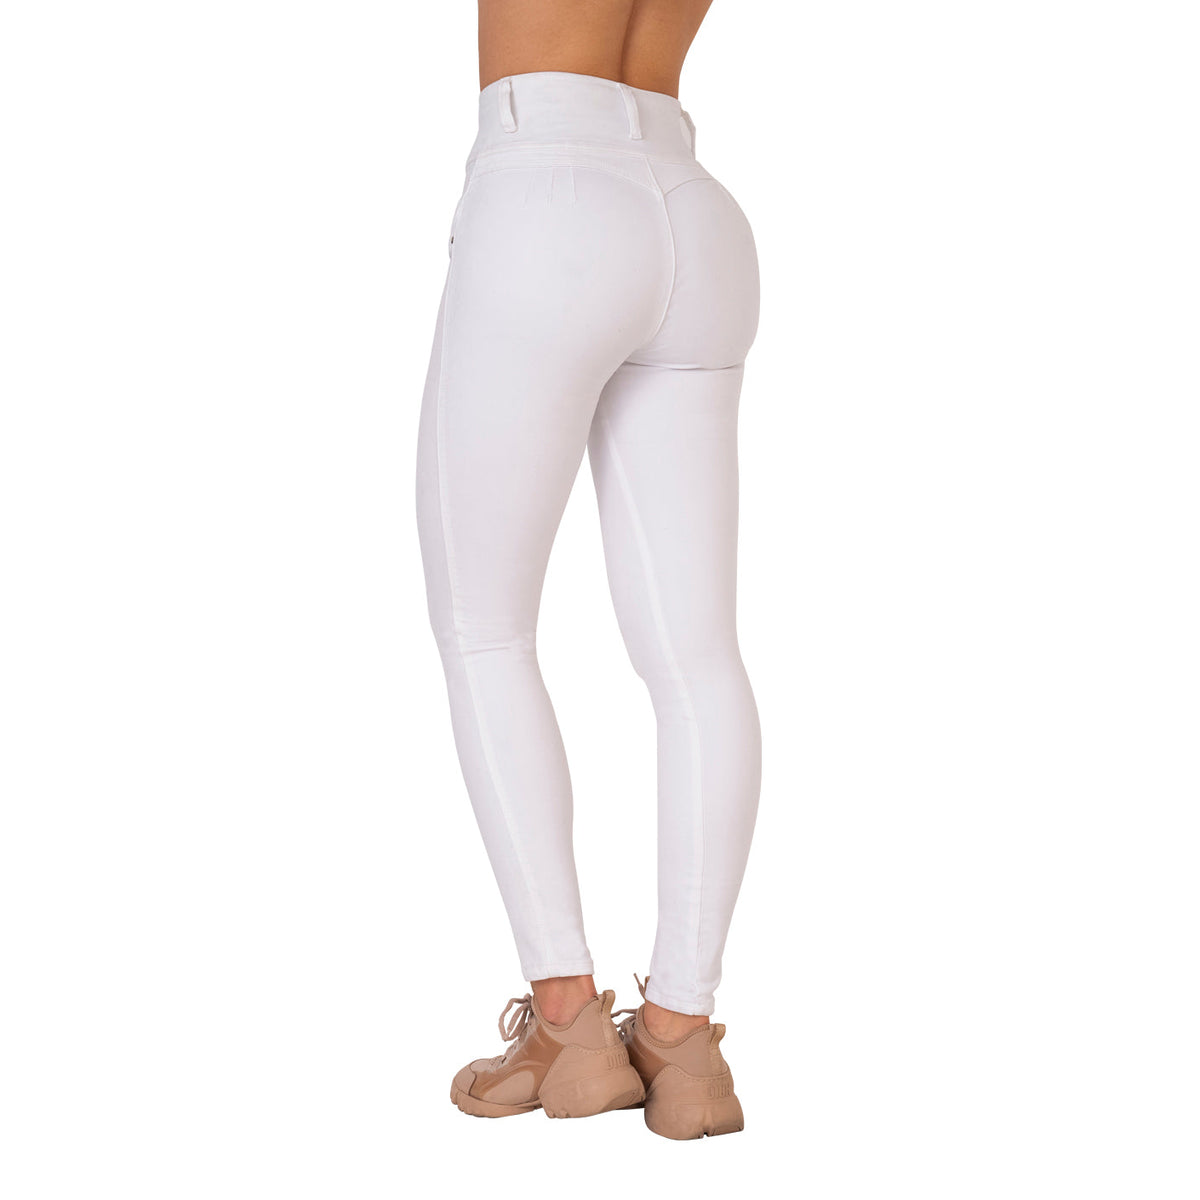 Lowla 242221  High Rise Butt Lifter Skinny Jeans For Women